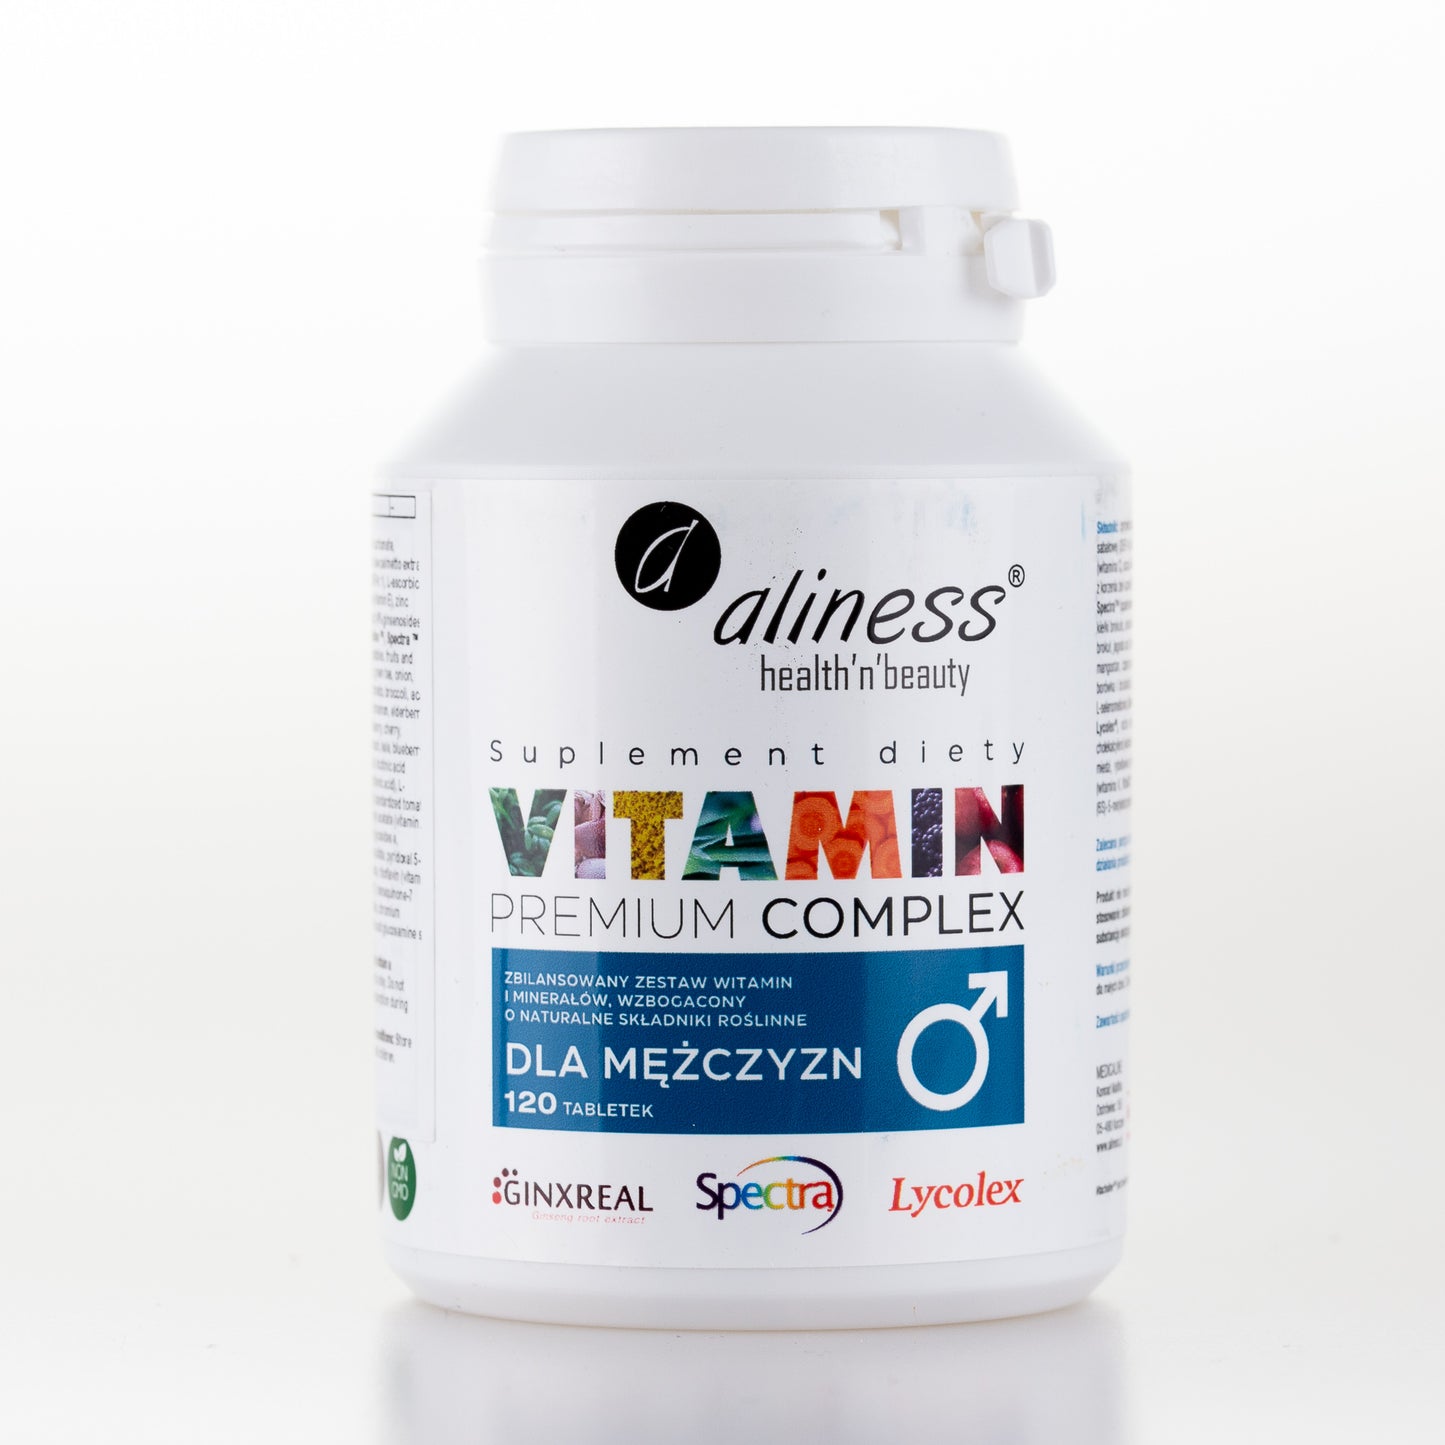 Premium Vitamin Complex for men, 120 vegan multivitamin tablets